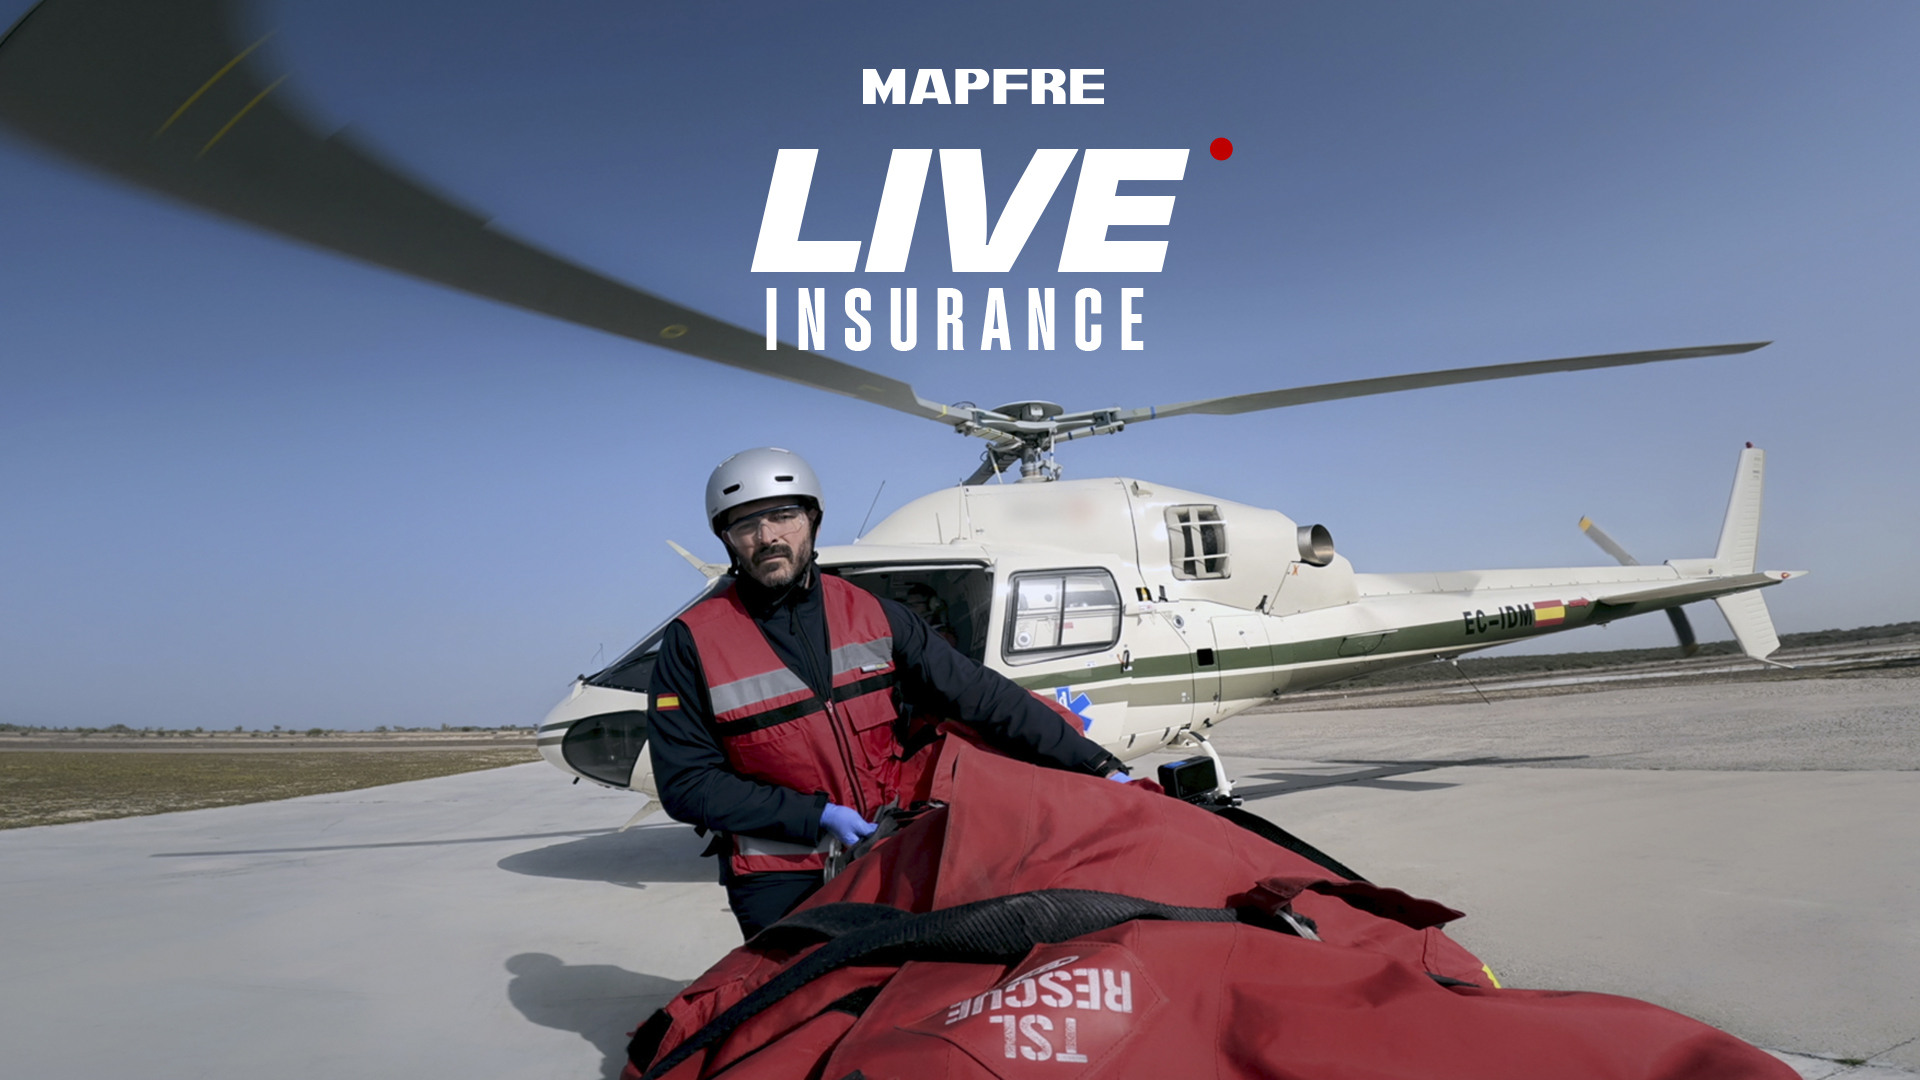 Live Insurance